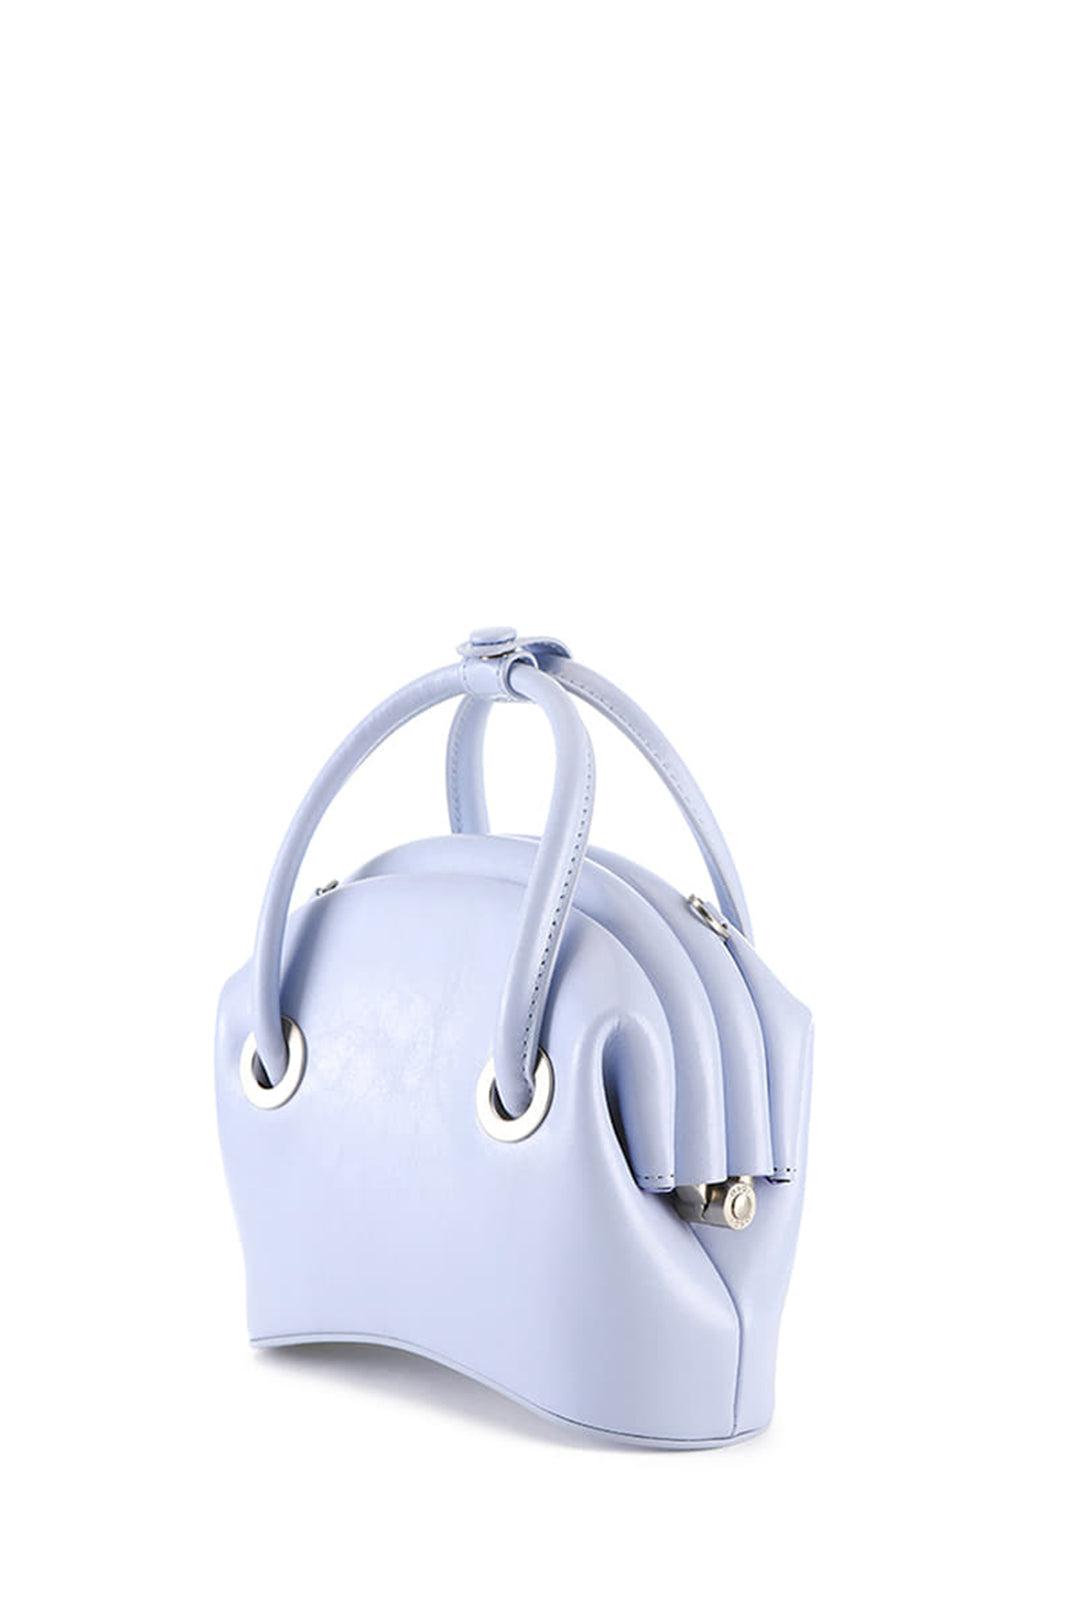 Osoi-Circle mini leather handbag-23SB010-12-04-dgallerystore